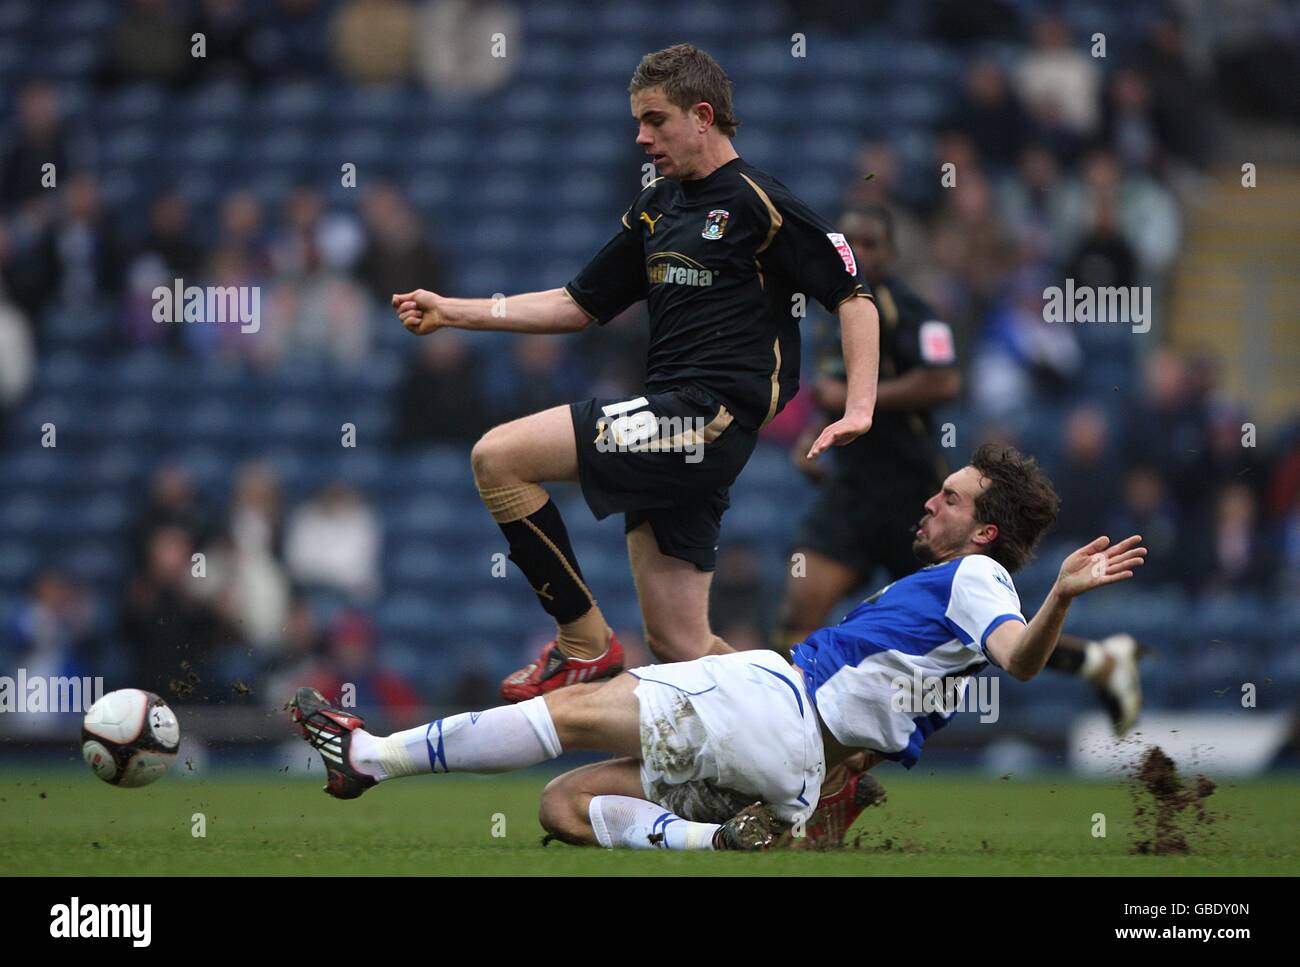 Blackburn Rovers' Gael Givet (right) slides in to challenge Coventry City's Jordan Henderson for the ball. Stock Photo